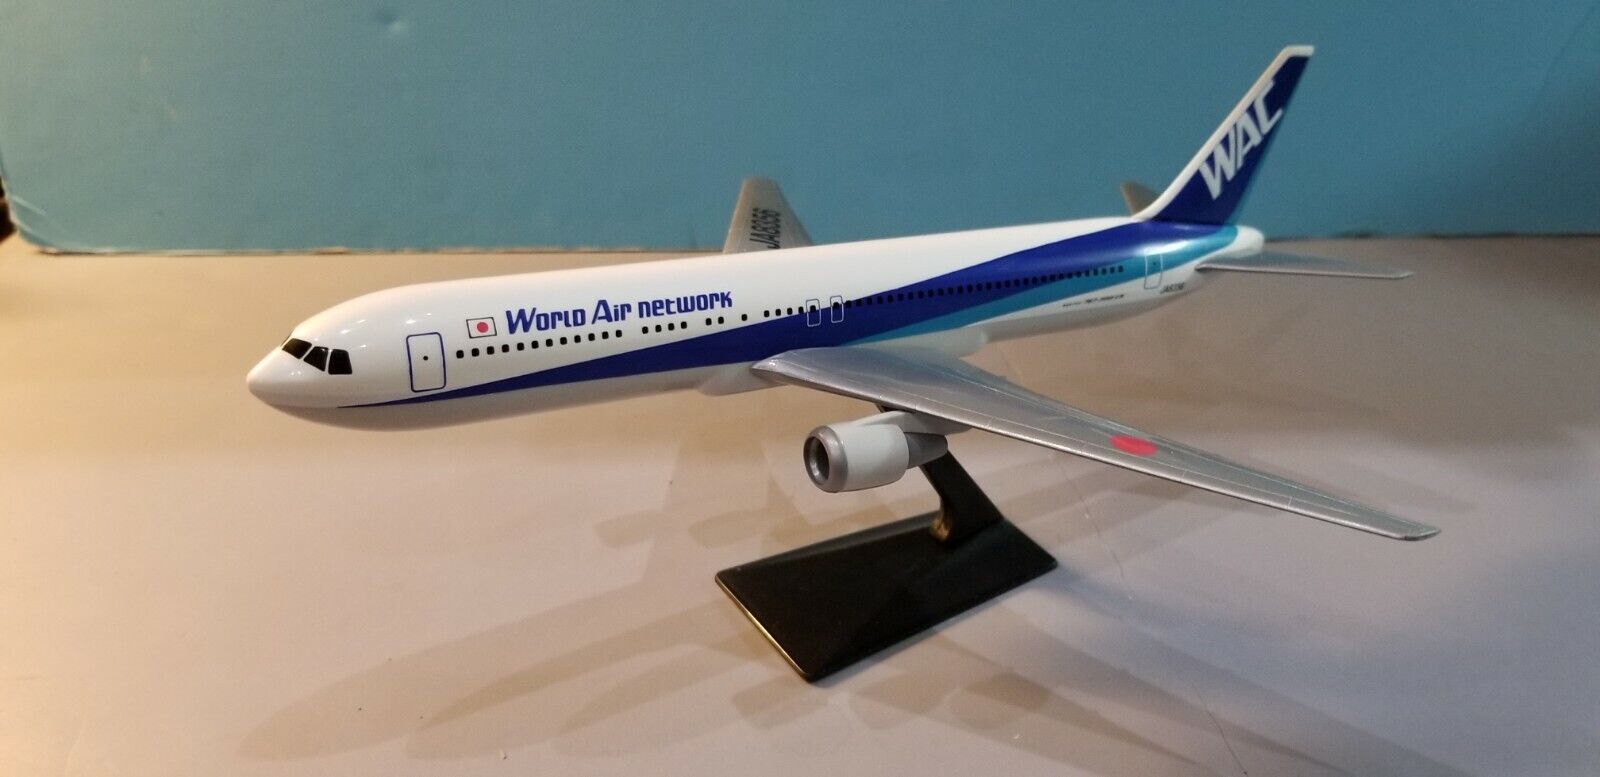 FLIGHT MINATURE WORLD AIR NETWORK 767-300ER 1:200 SCALE PLASTIC SNAPFIT MODEL